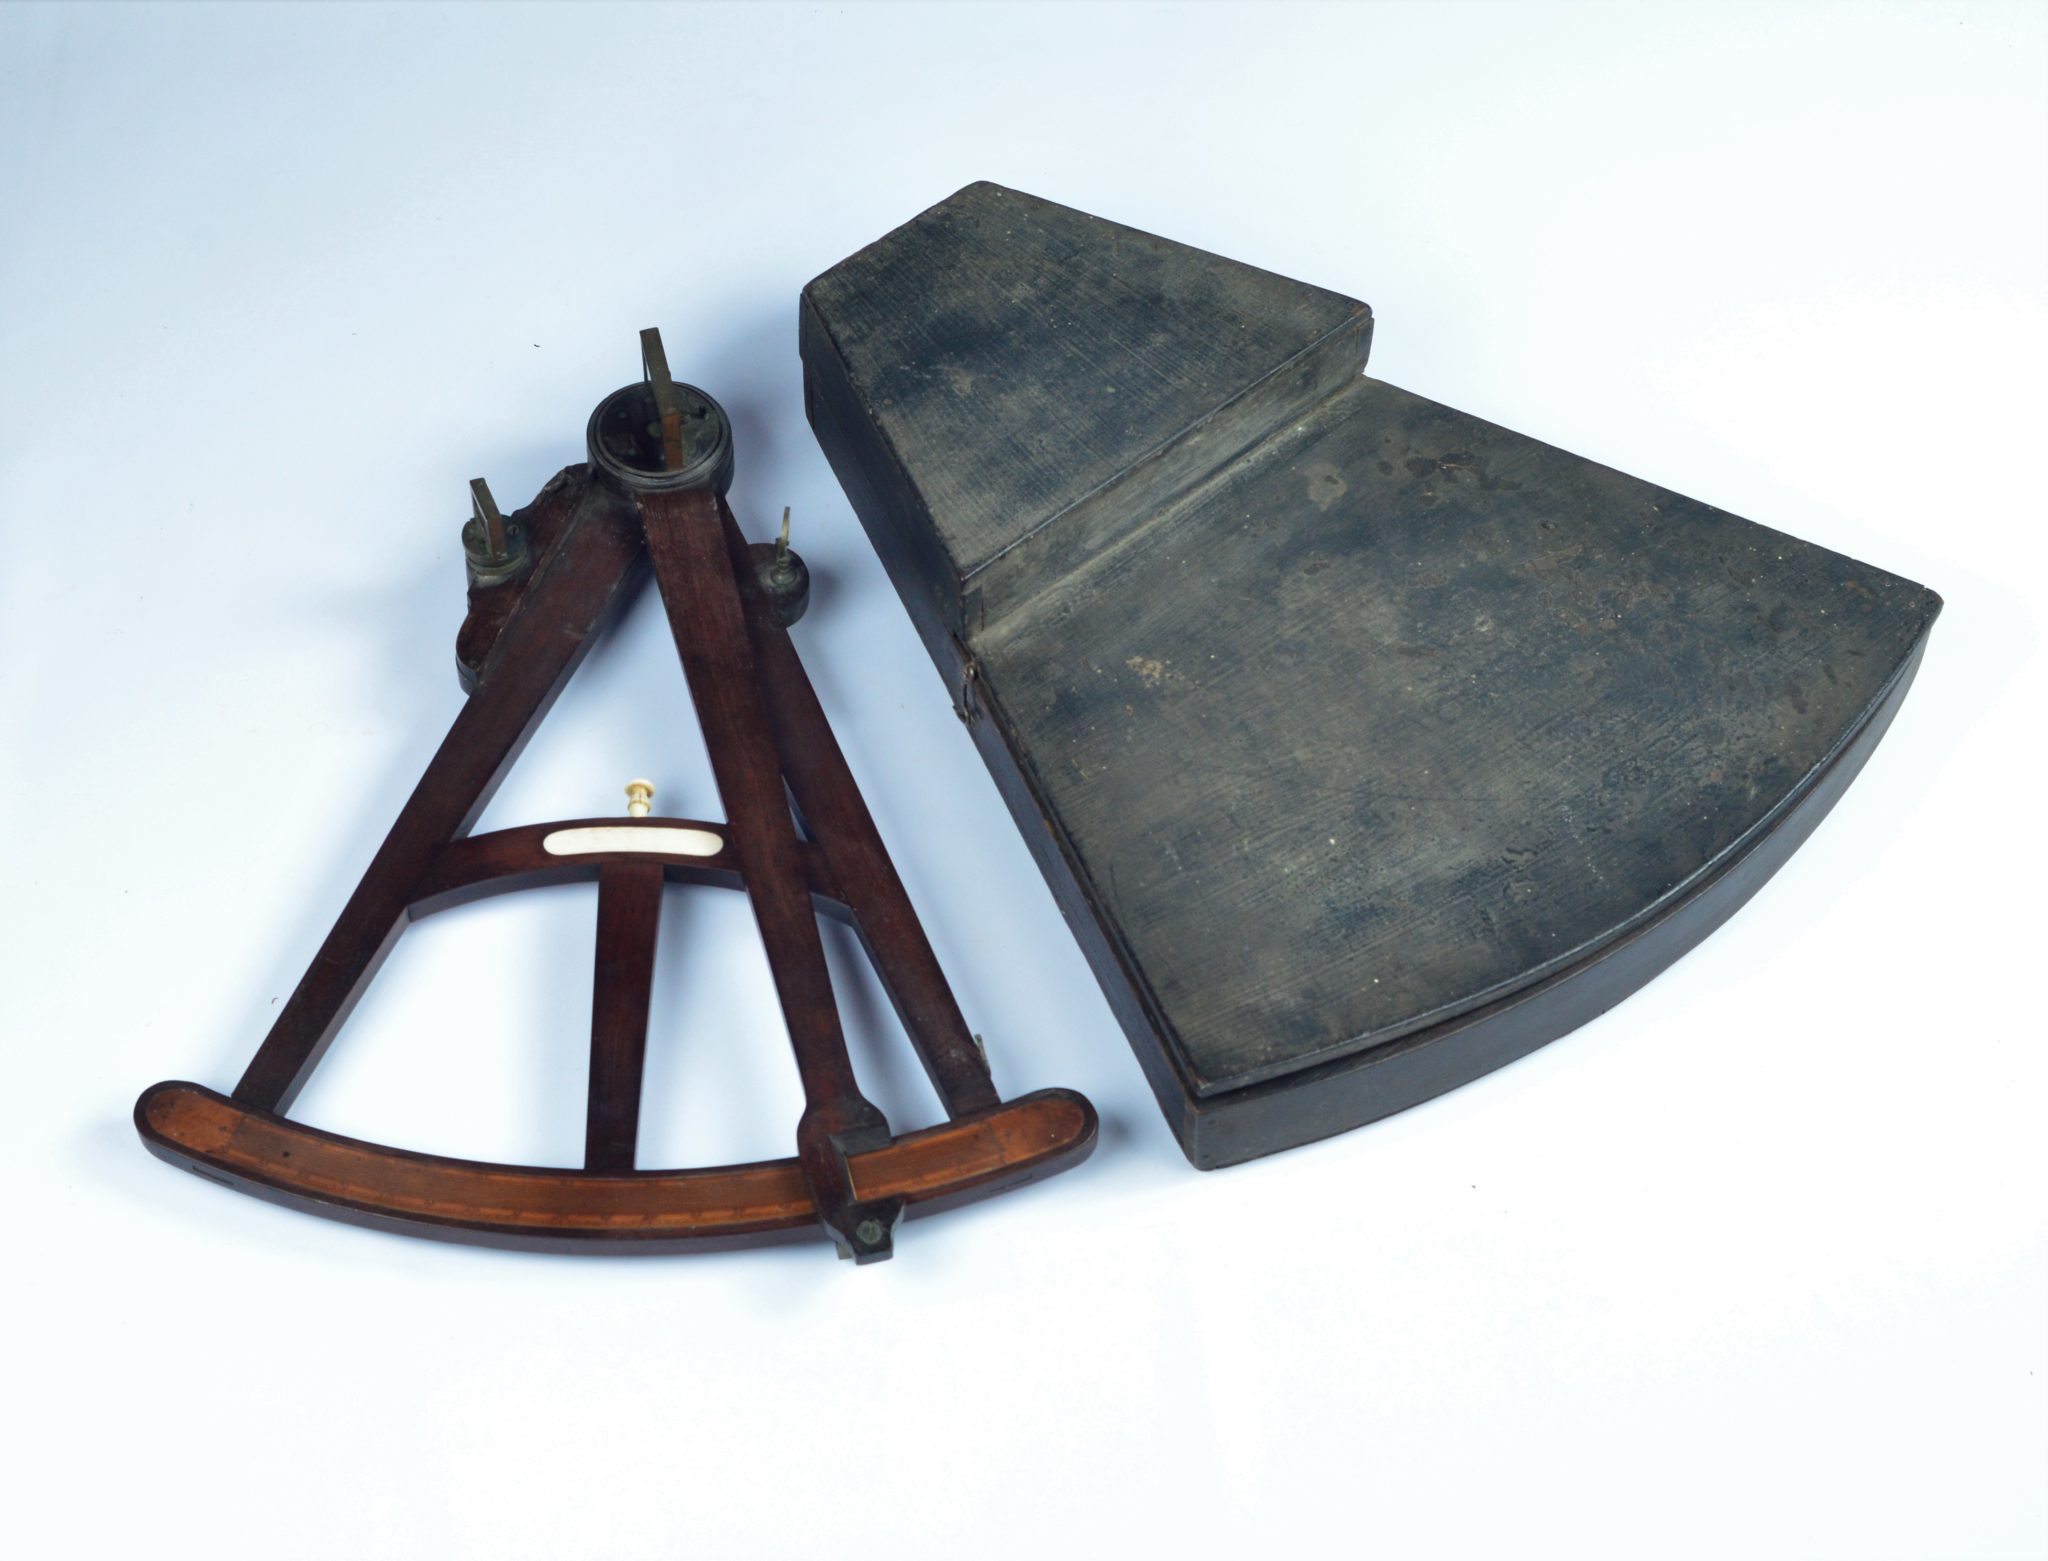 16-inch Hadley’s Quadrant (octant) – around 1740, England or North America